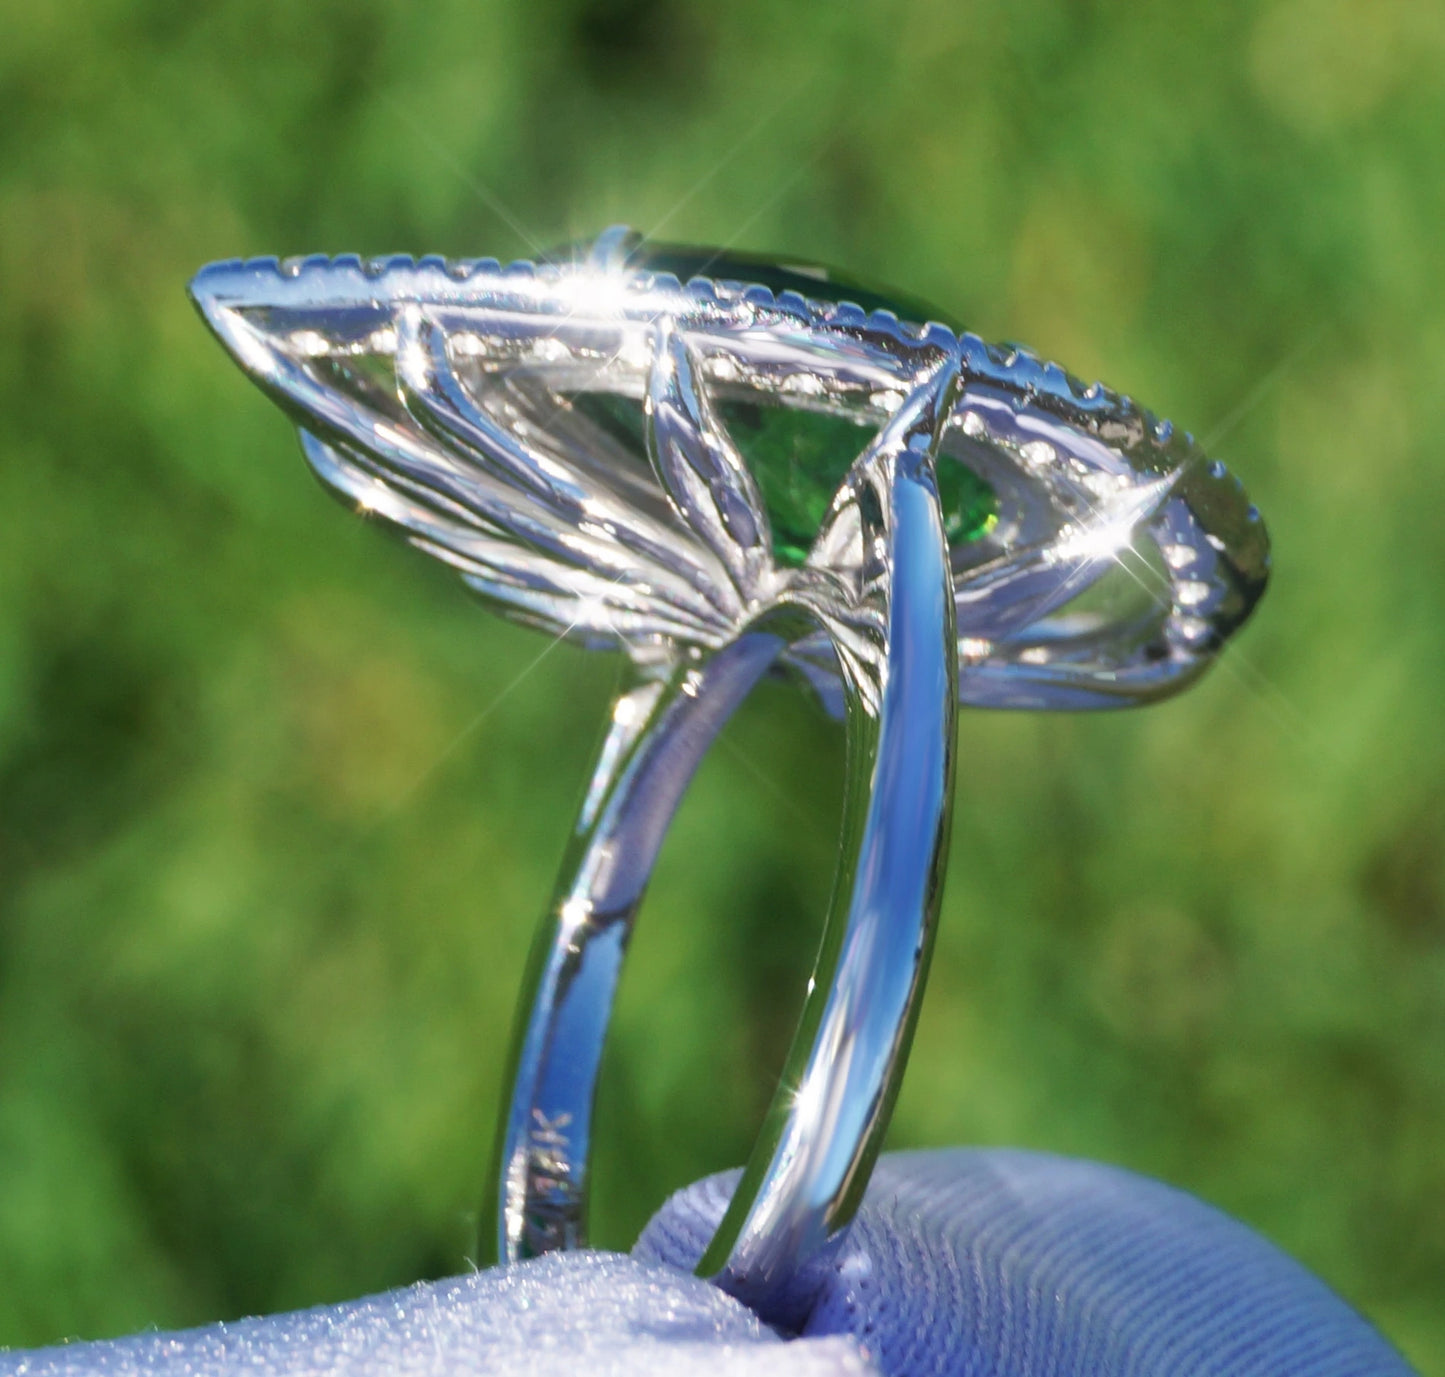 Tsavorite diamond ring white 14k gold gia certified 5.43ctw green garnet pear cut